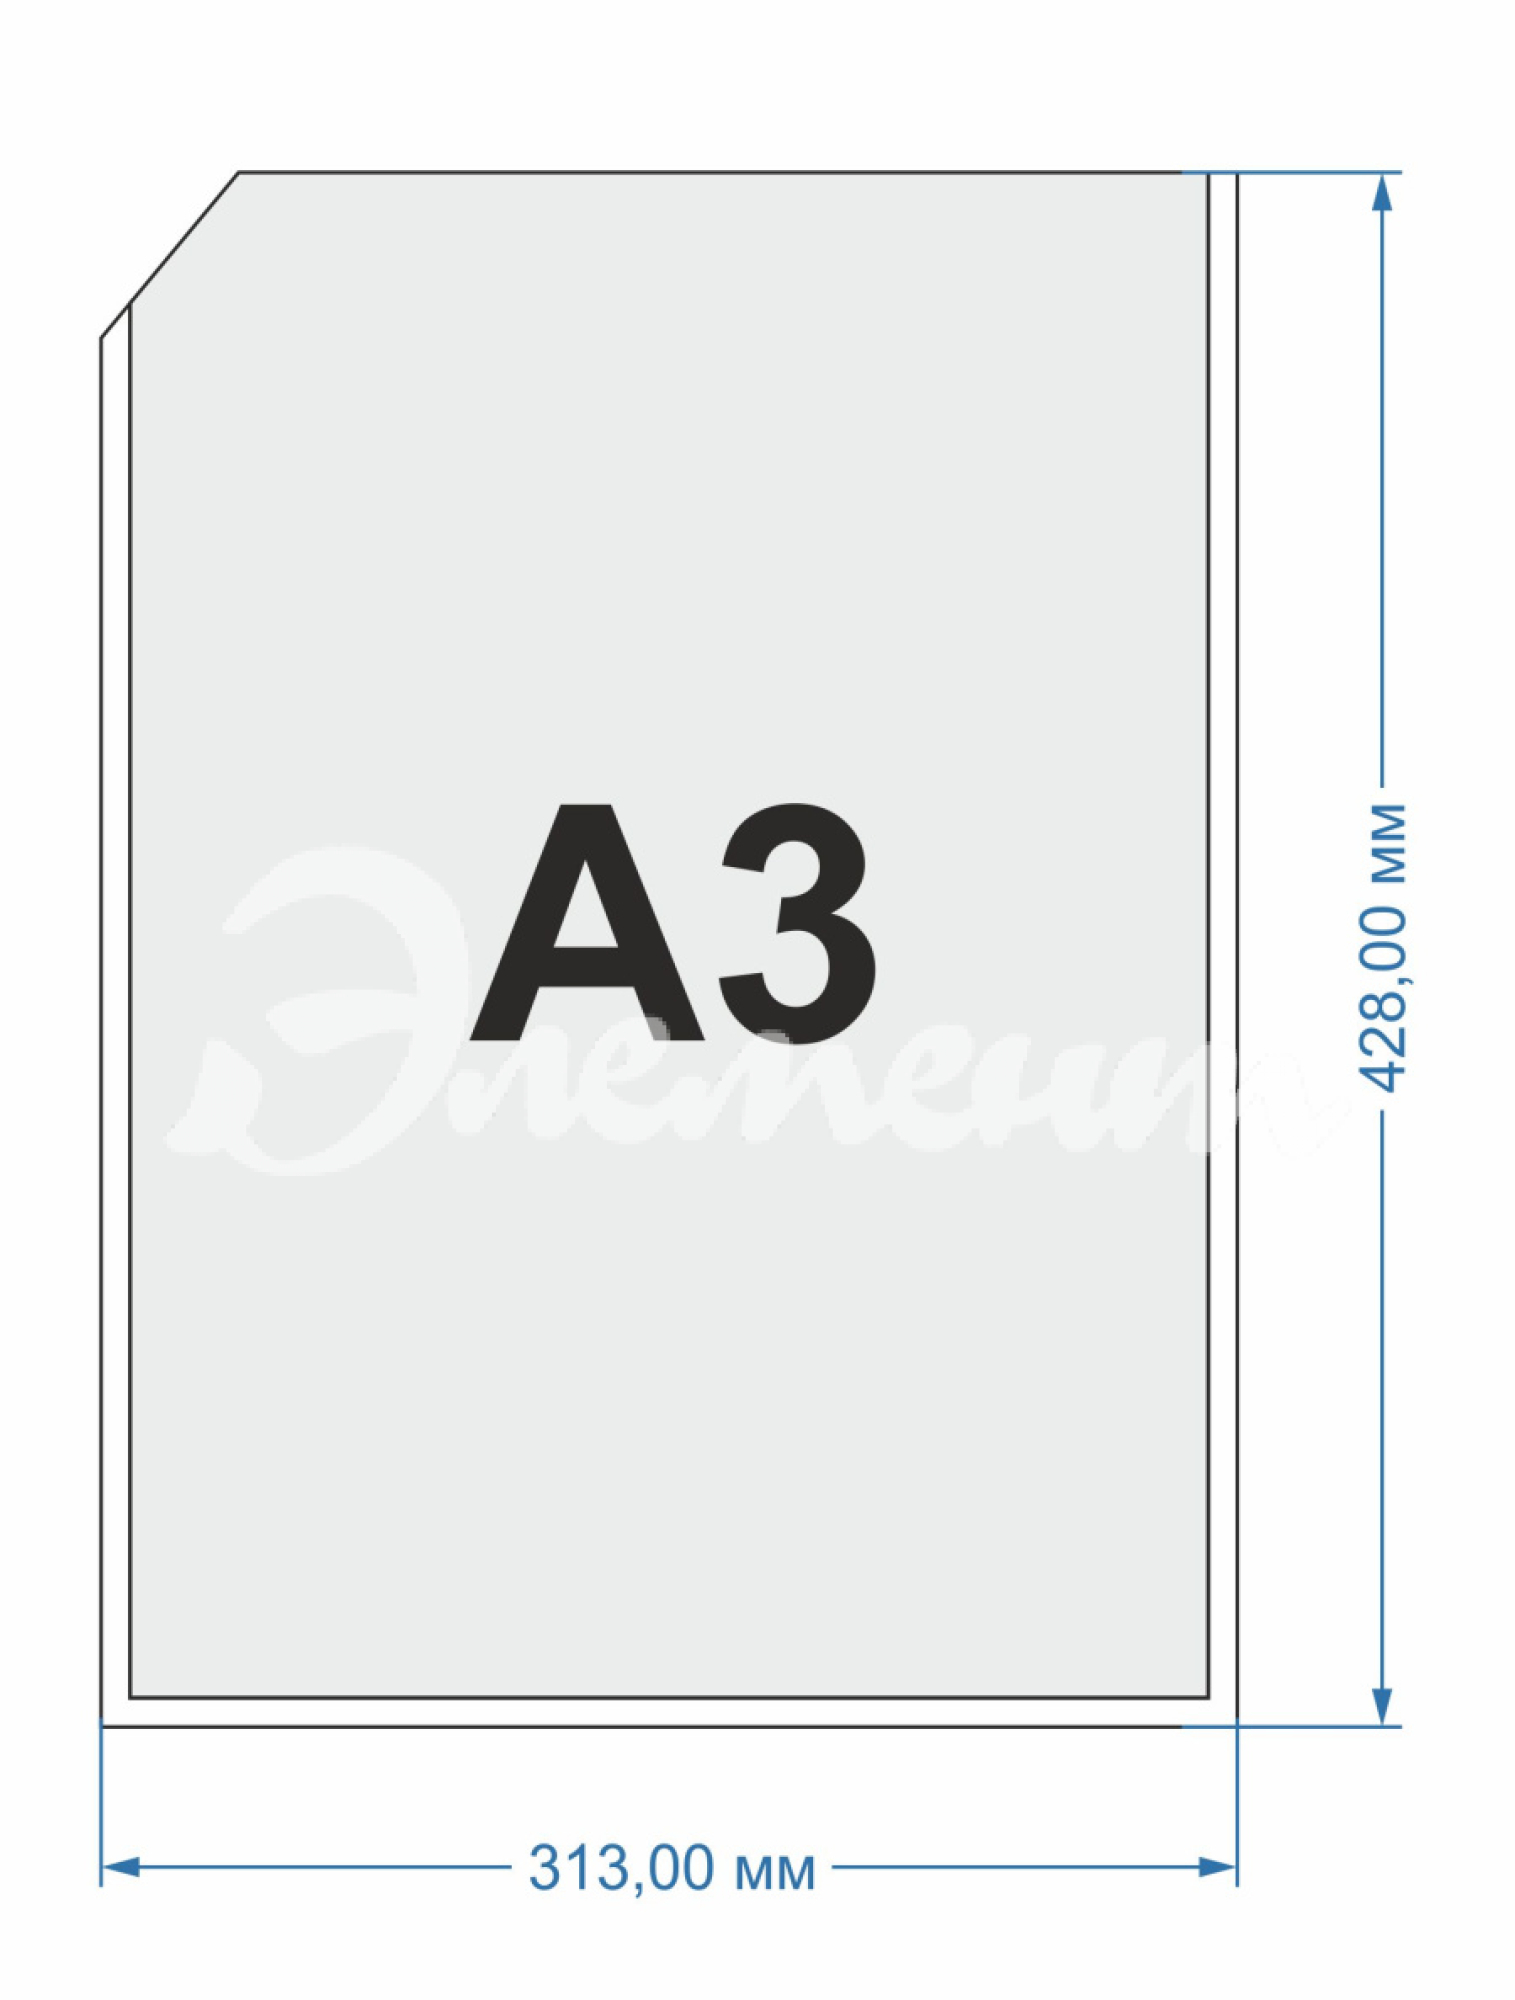 Размер стандартного листа бумаги. Формат а3. А3 размер. Форма 3. Формат а3 Размеры.